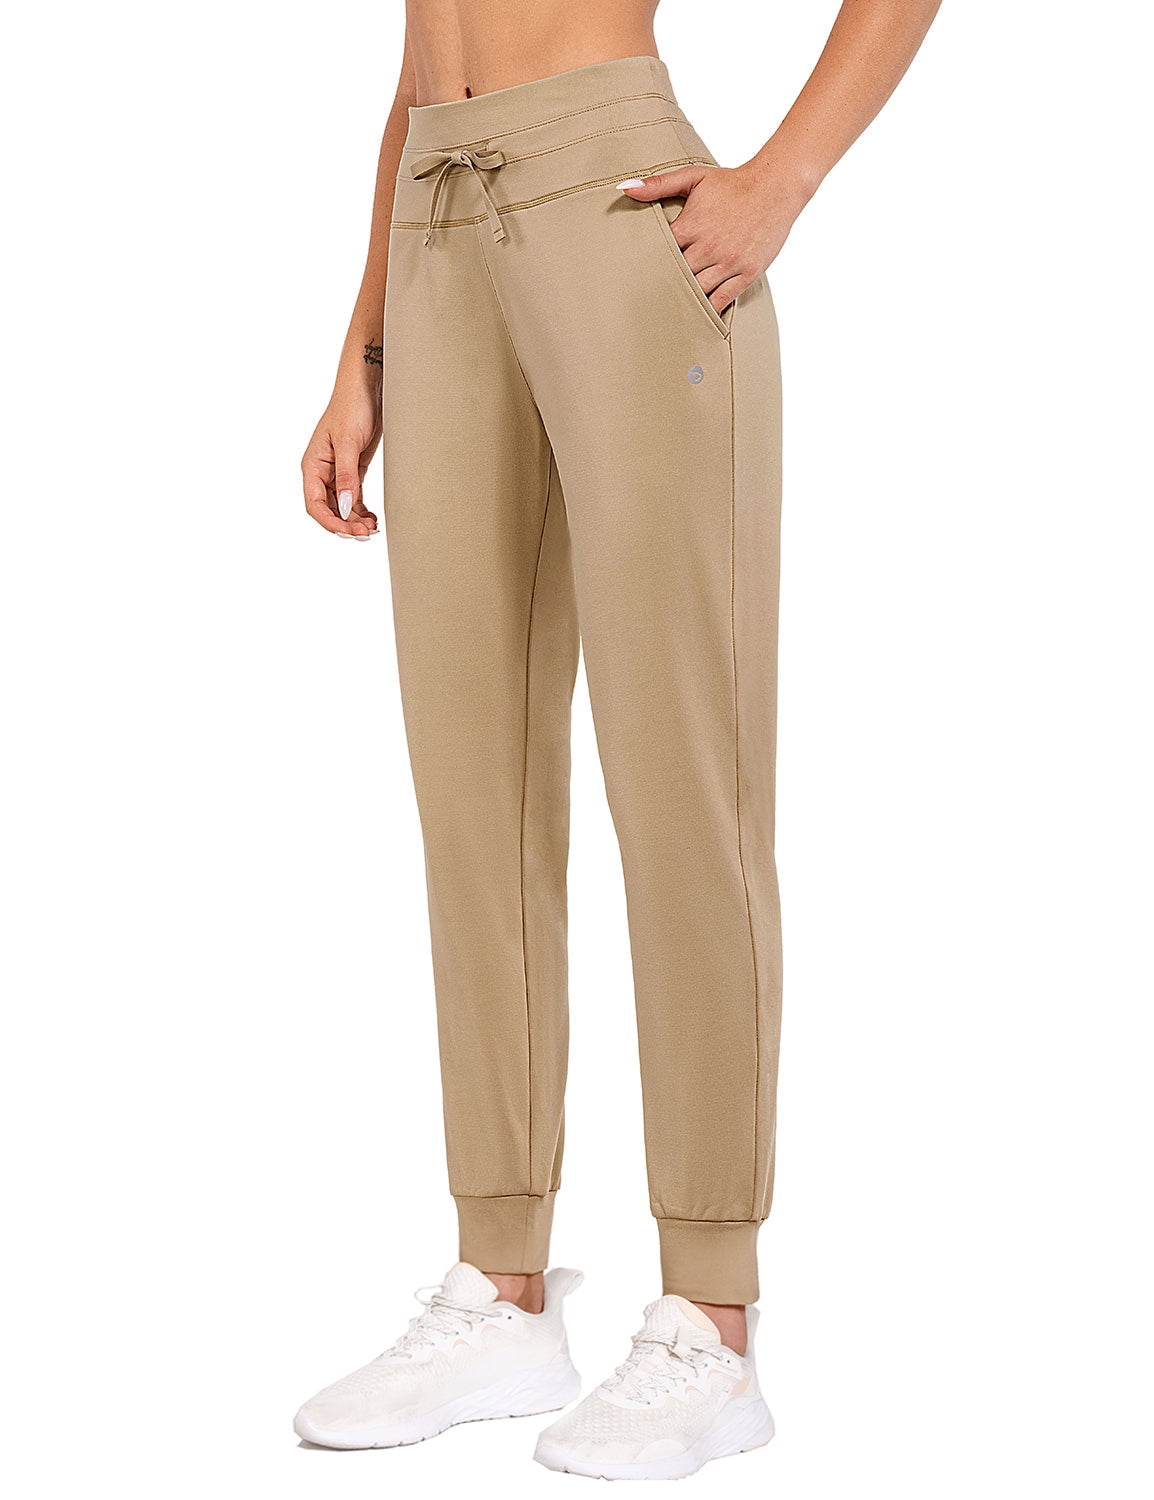 BALEAF Women's Fleece Lined Pants Water Resistant Sweatpants High ...